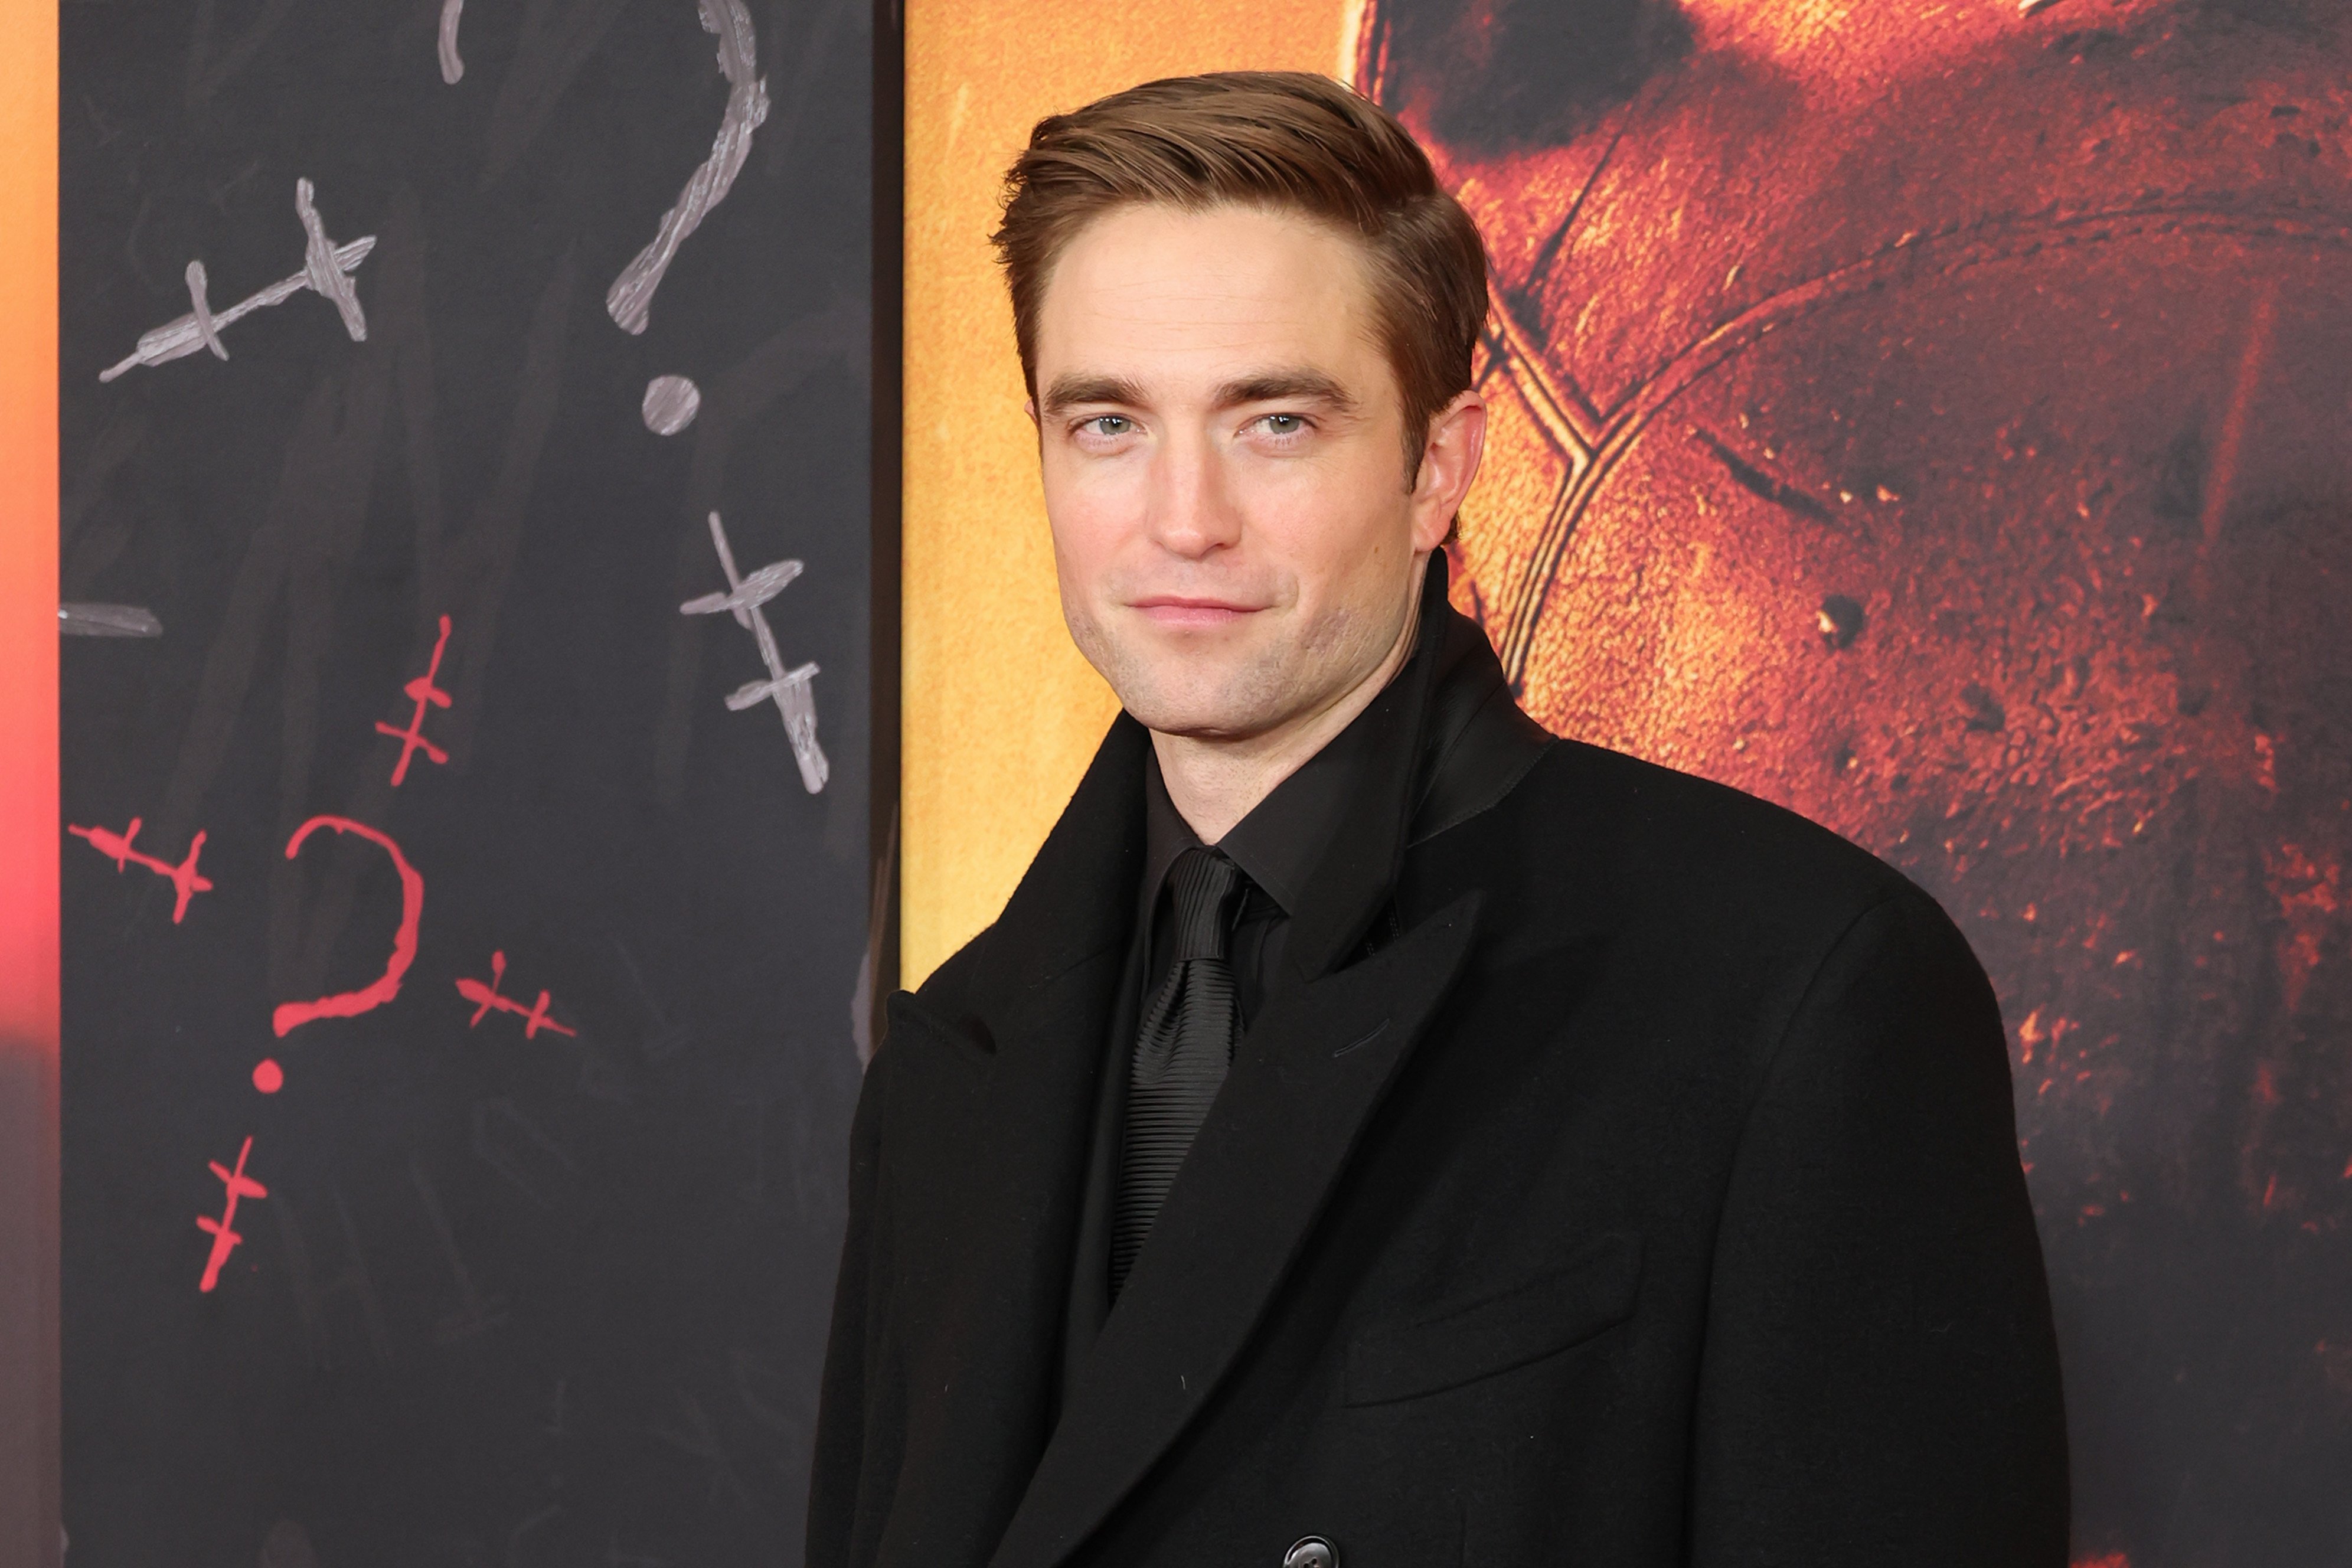 acting star Robert Pattinson wears black to 'The Batman' premiere